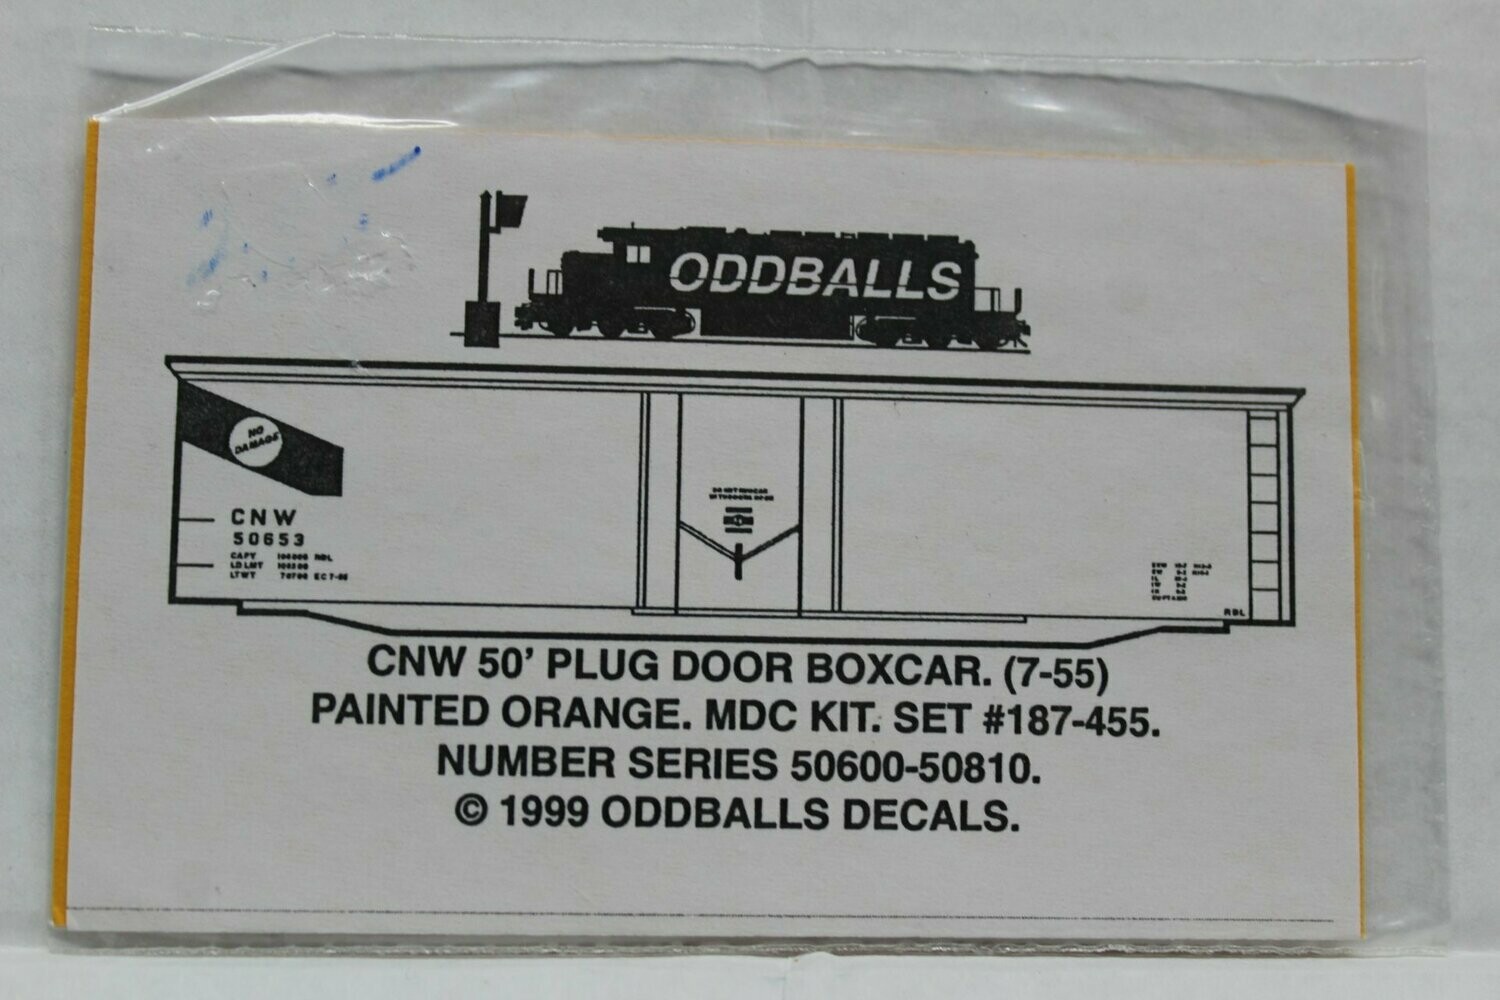 C N W Orange 50' Plug Door Boxcar Decal set ODDBALLS